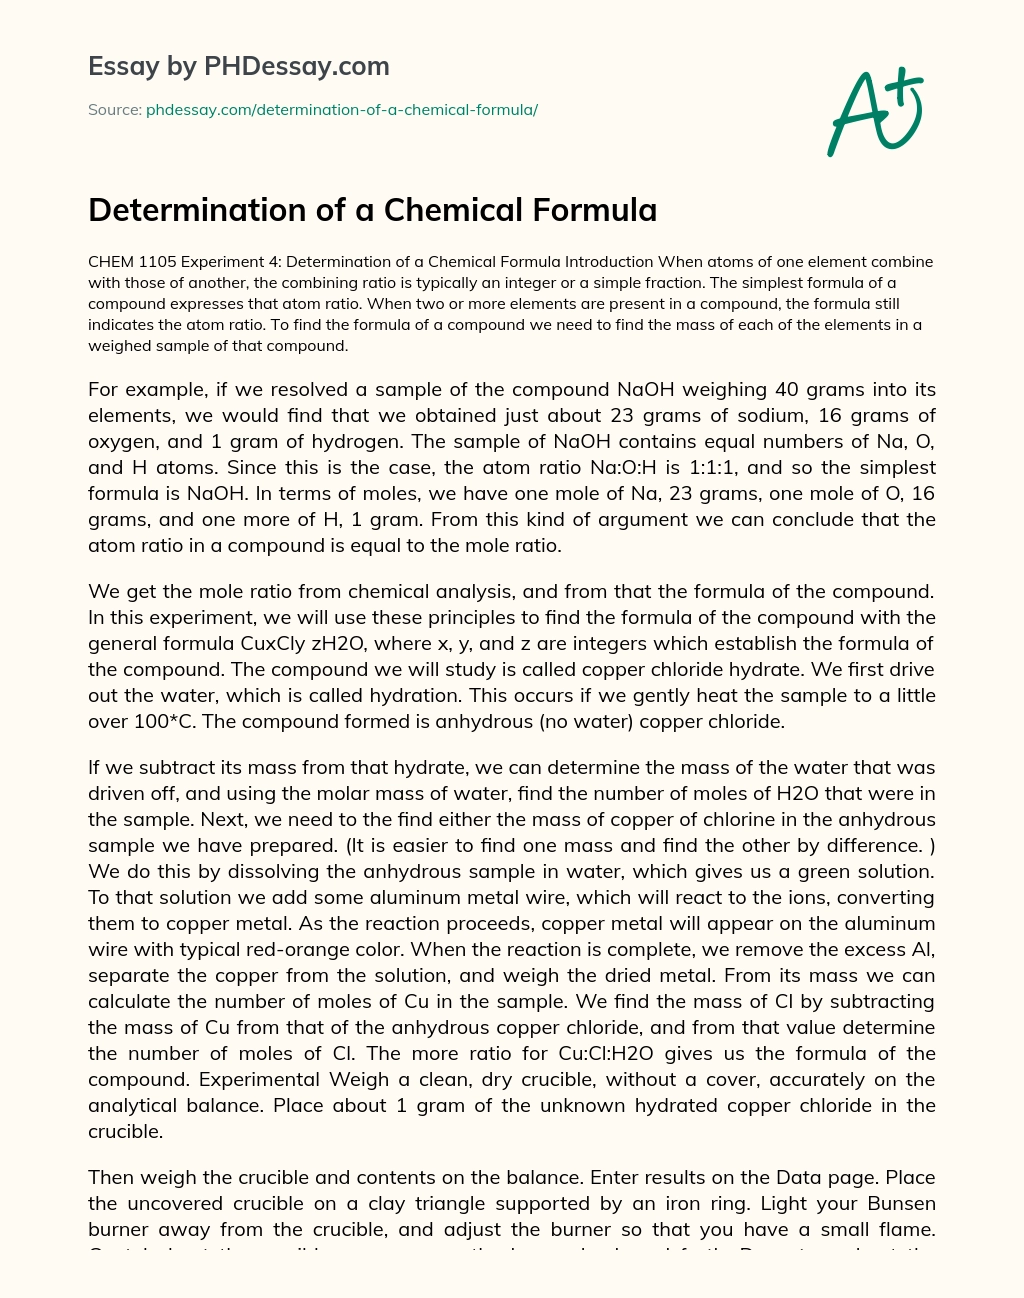 Determination of a Chemical Formula essay